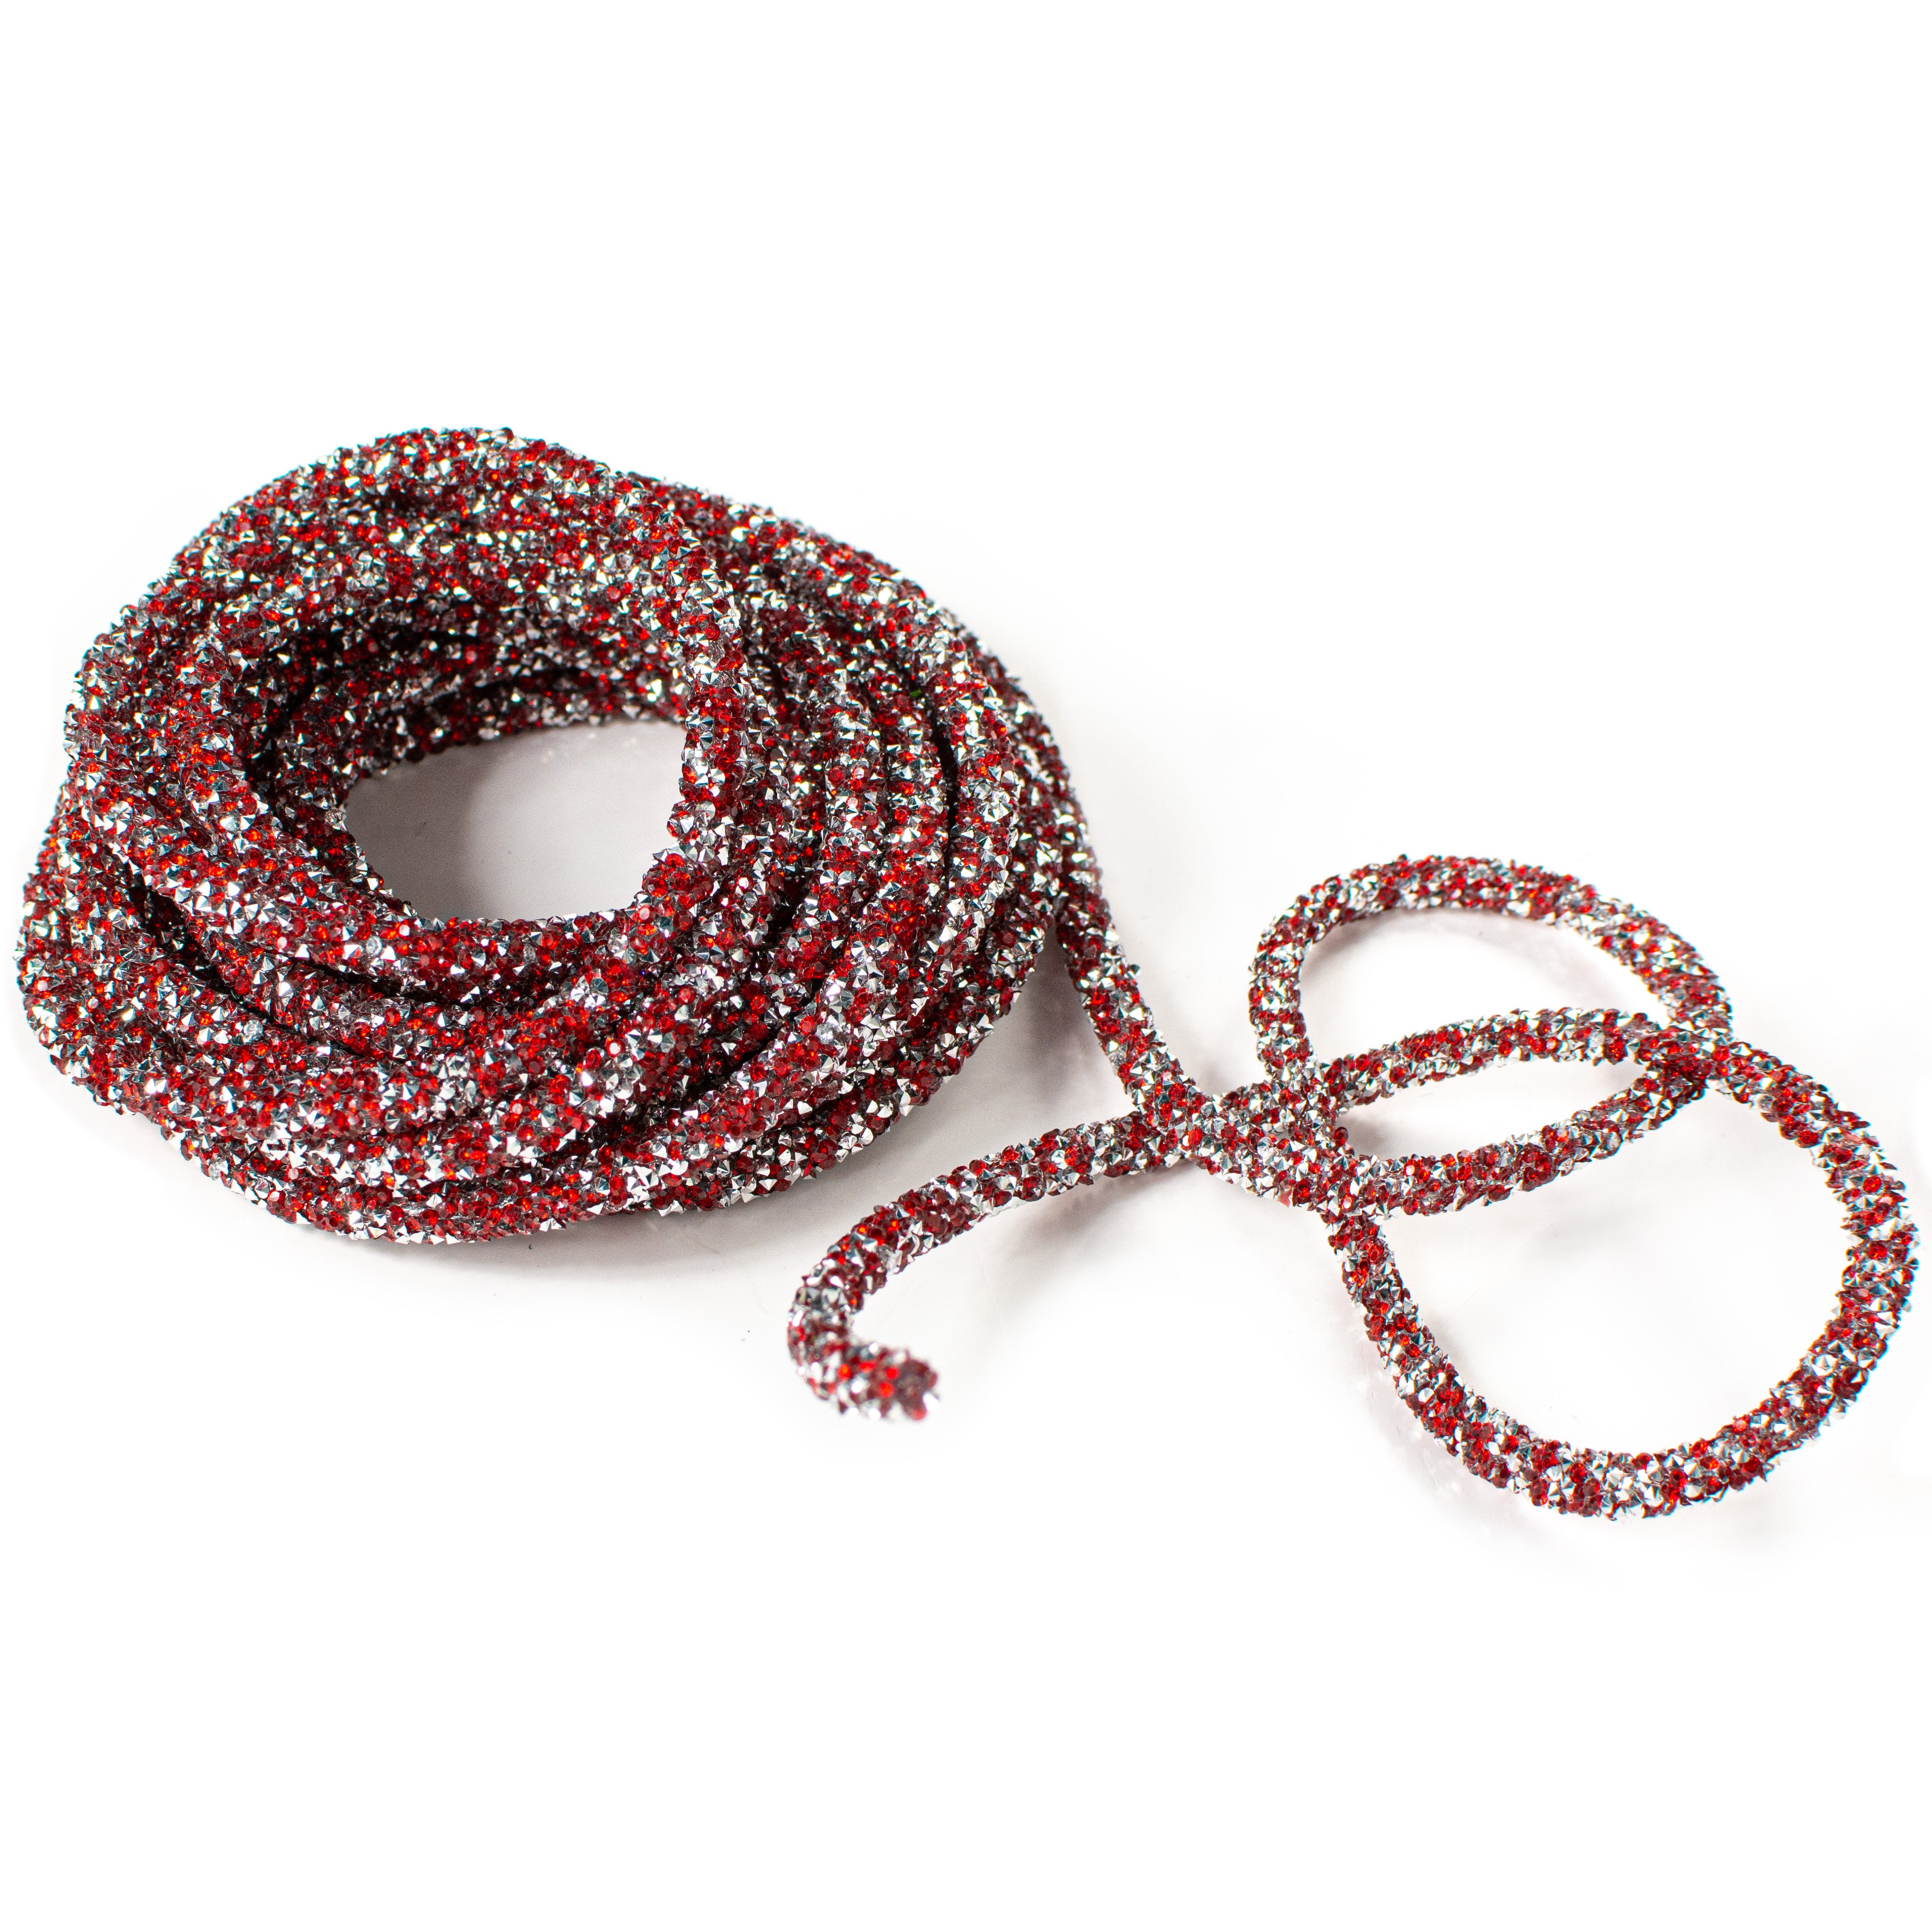 15' Diamond Rope Roll: Red